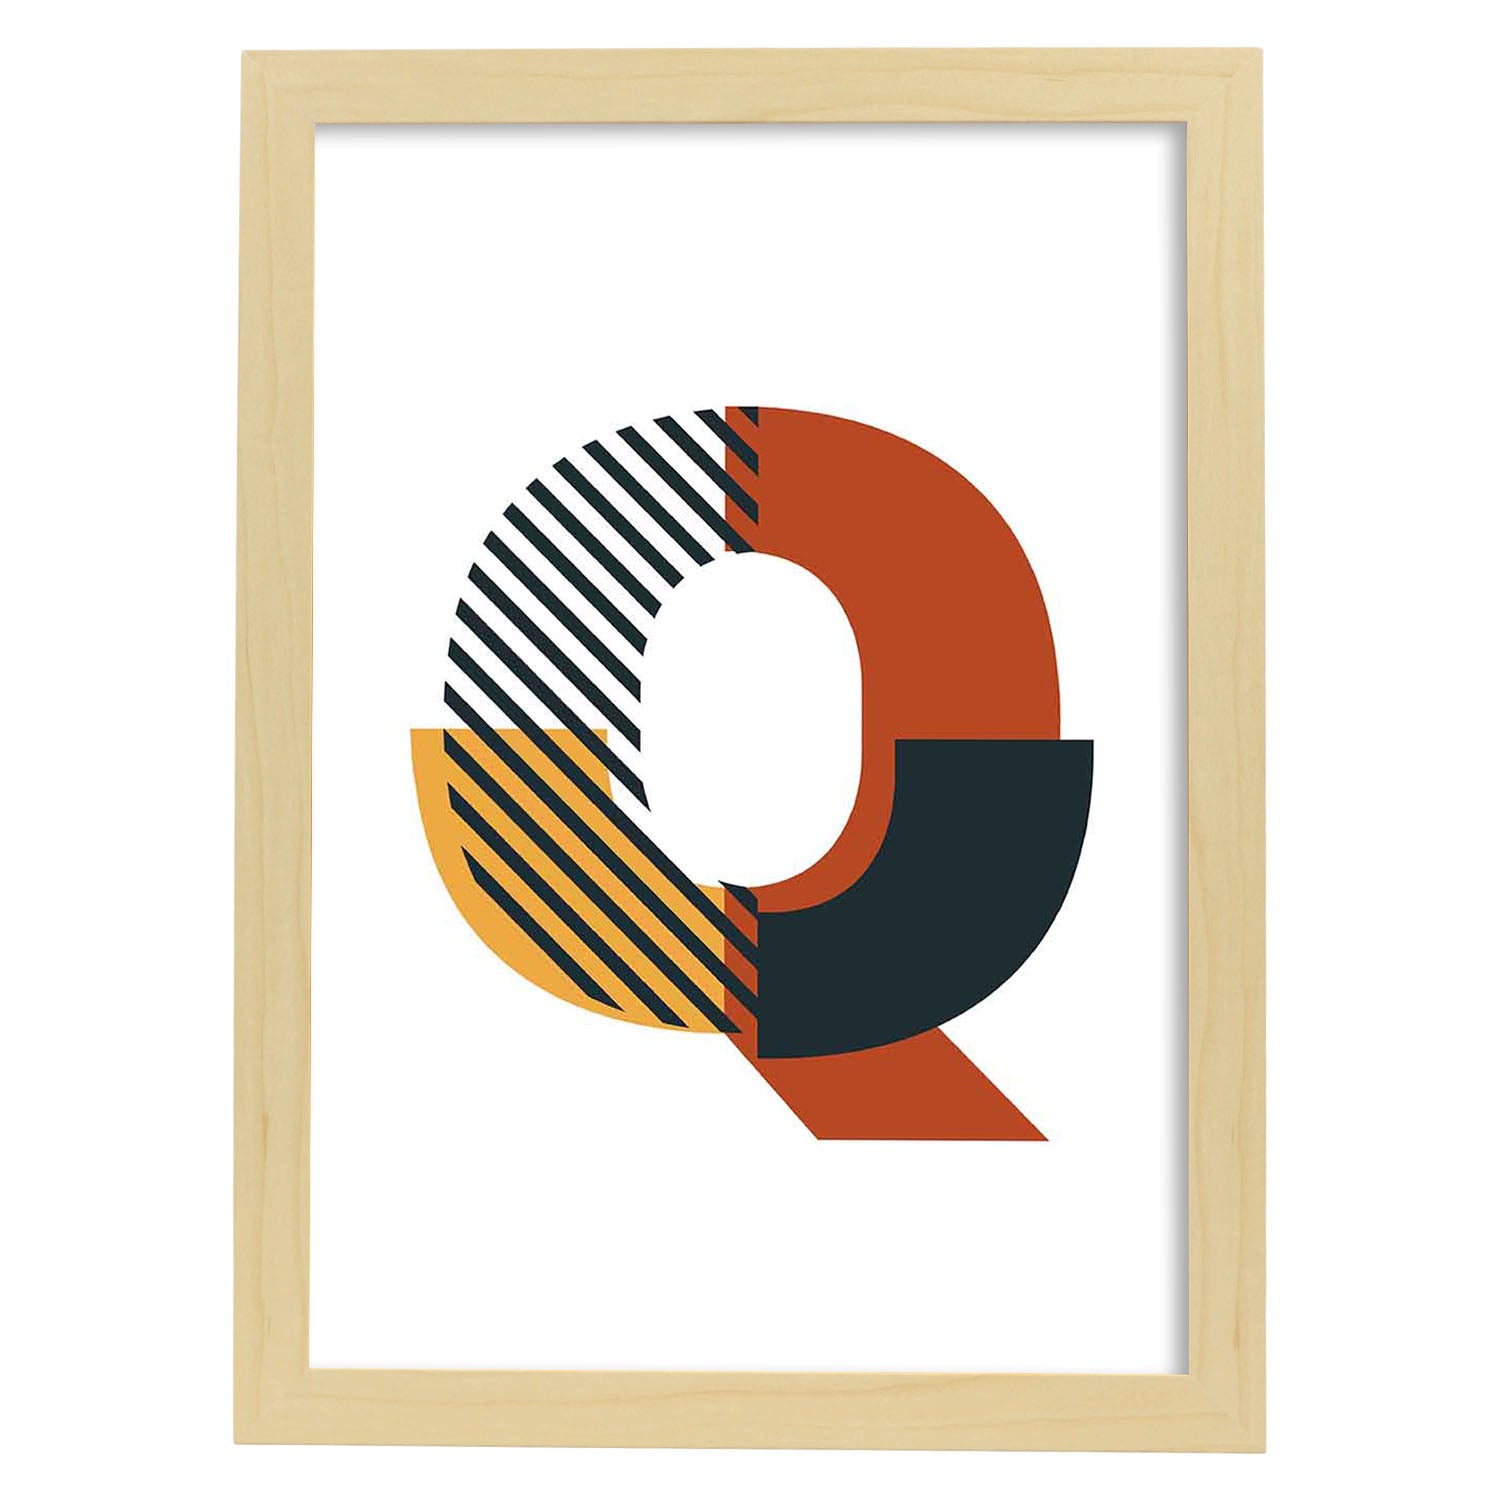 Poster de letra Q. Lámina estilo Geometria con imágenes del alfabeto.-Artwork-Nacnic-A4-Marco Madera clara-Nacnic Estudio SL